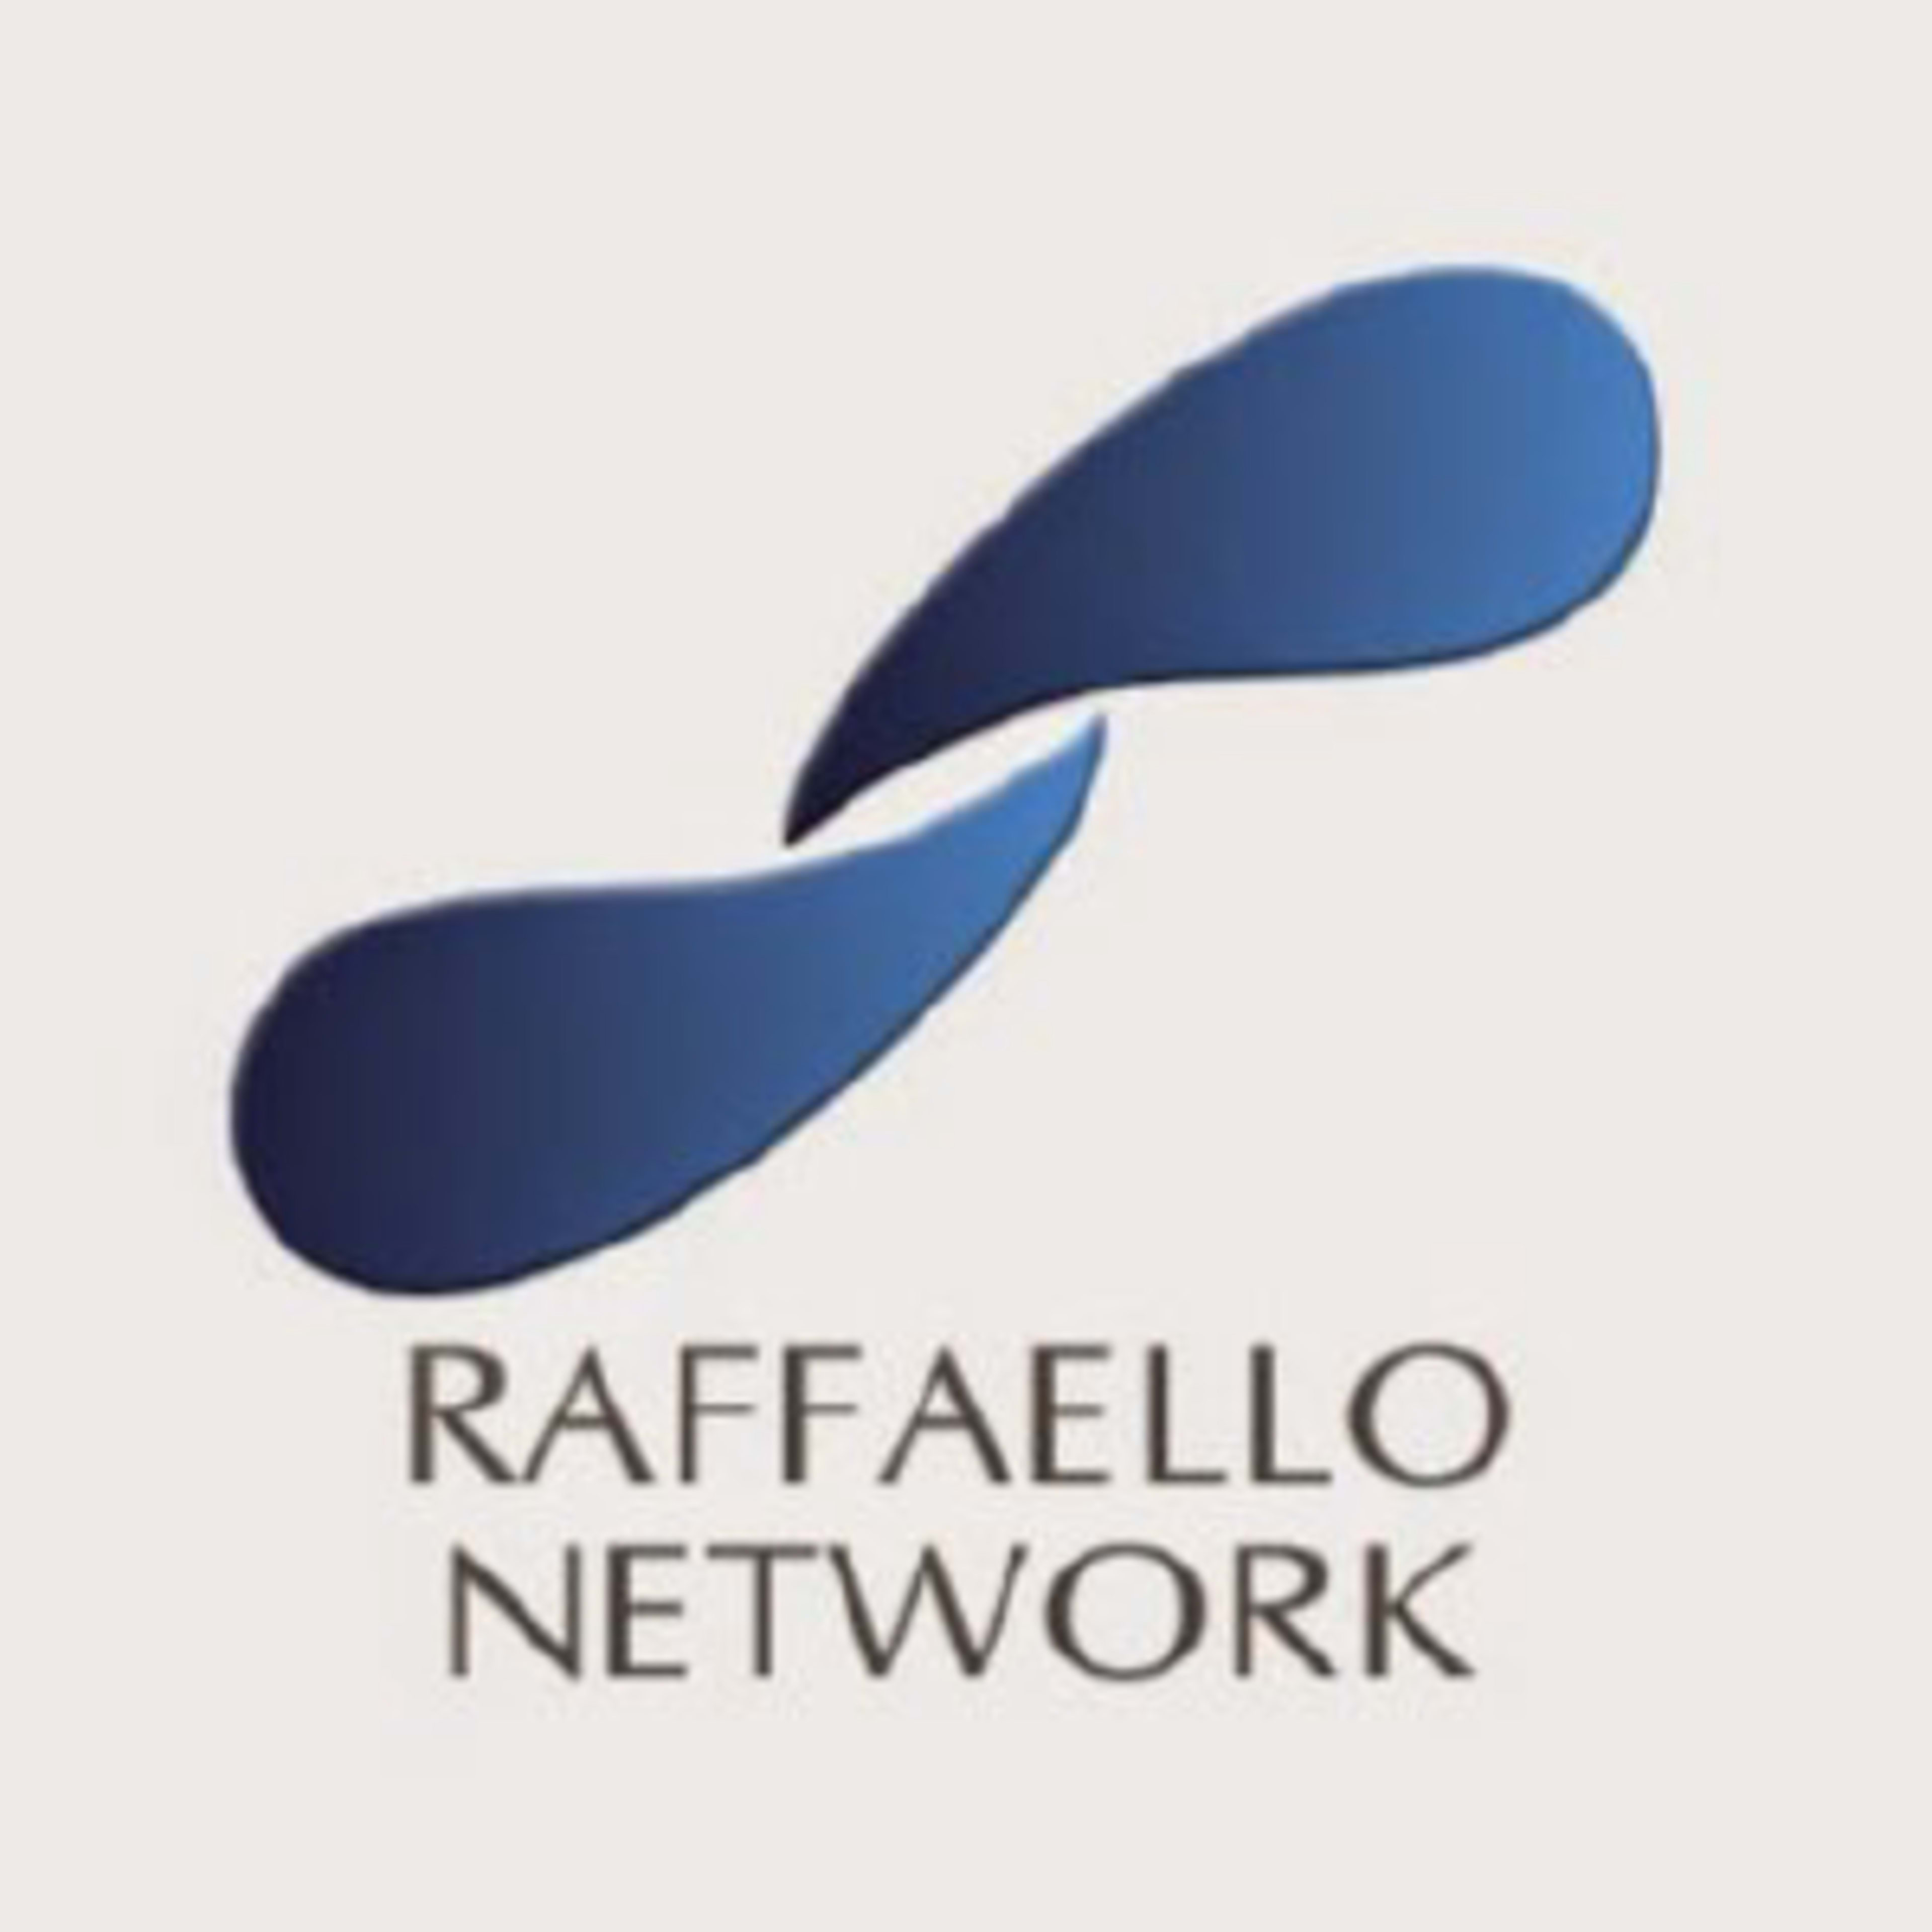 Raffaello NetworkCode